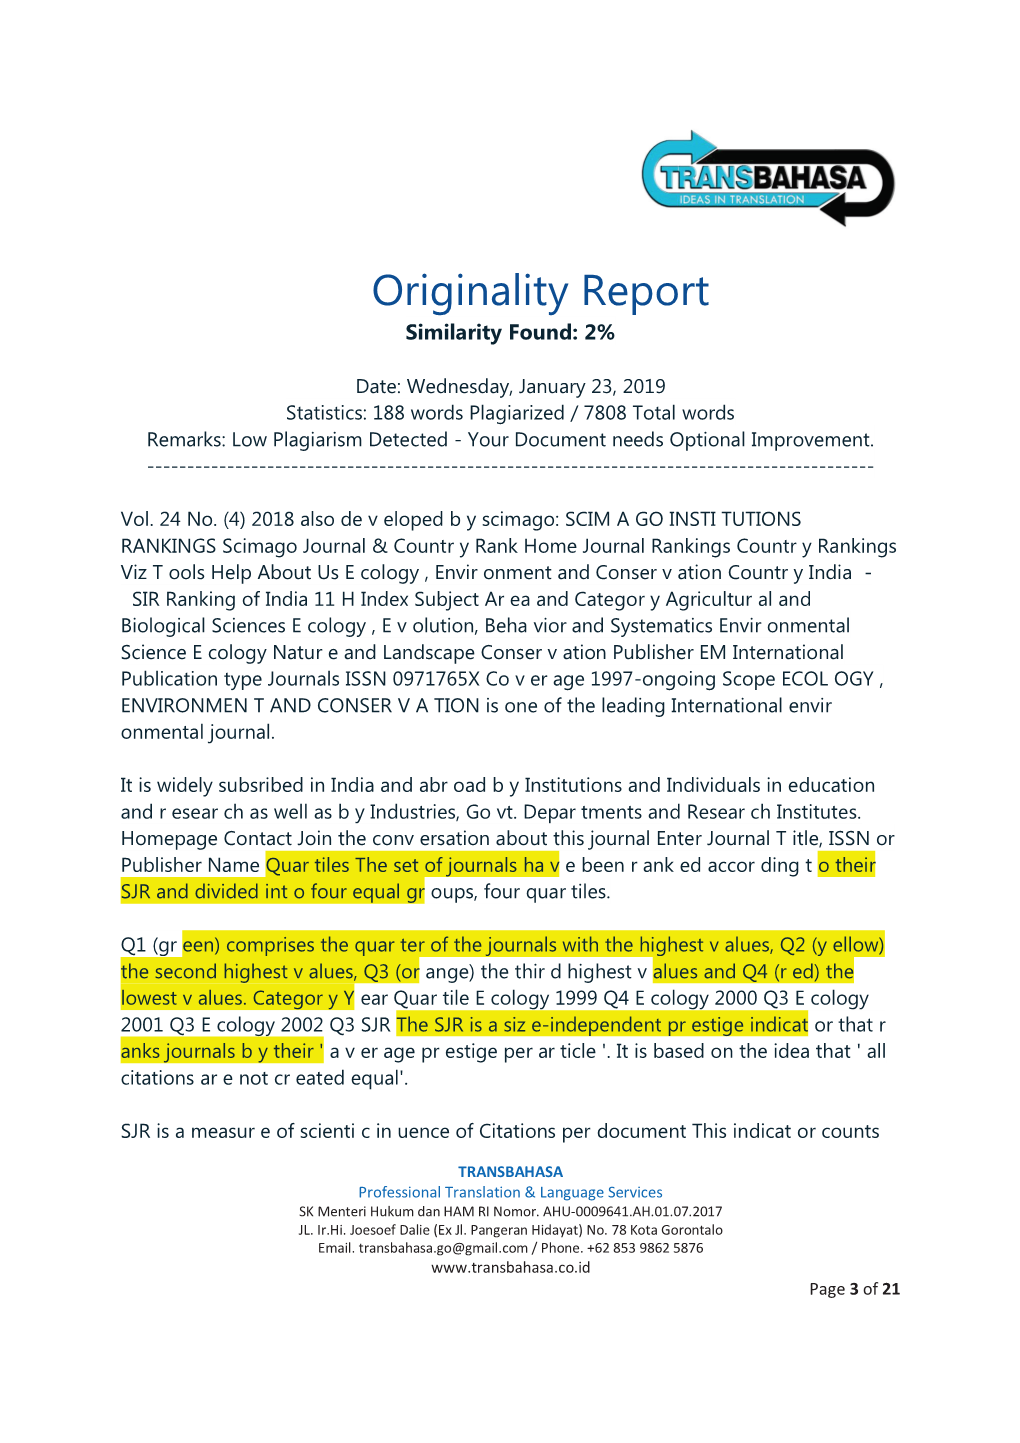 Originality Report Similarity Found: 2%